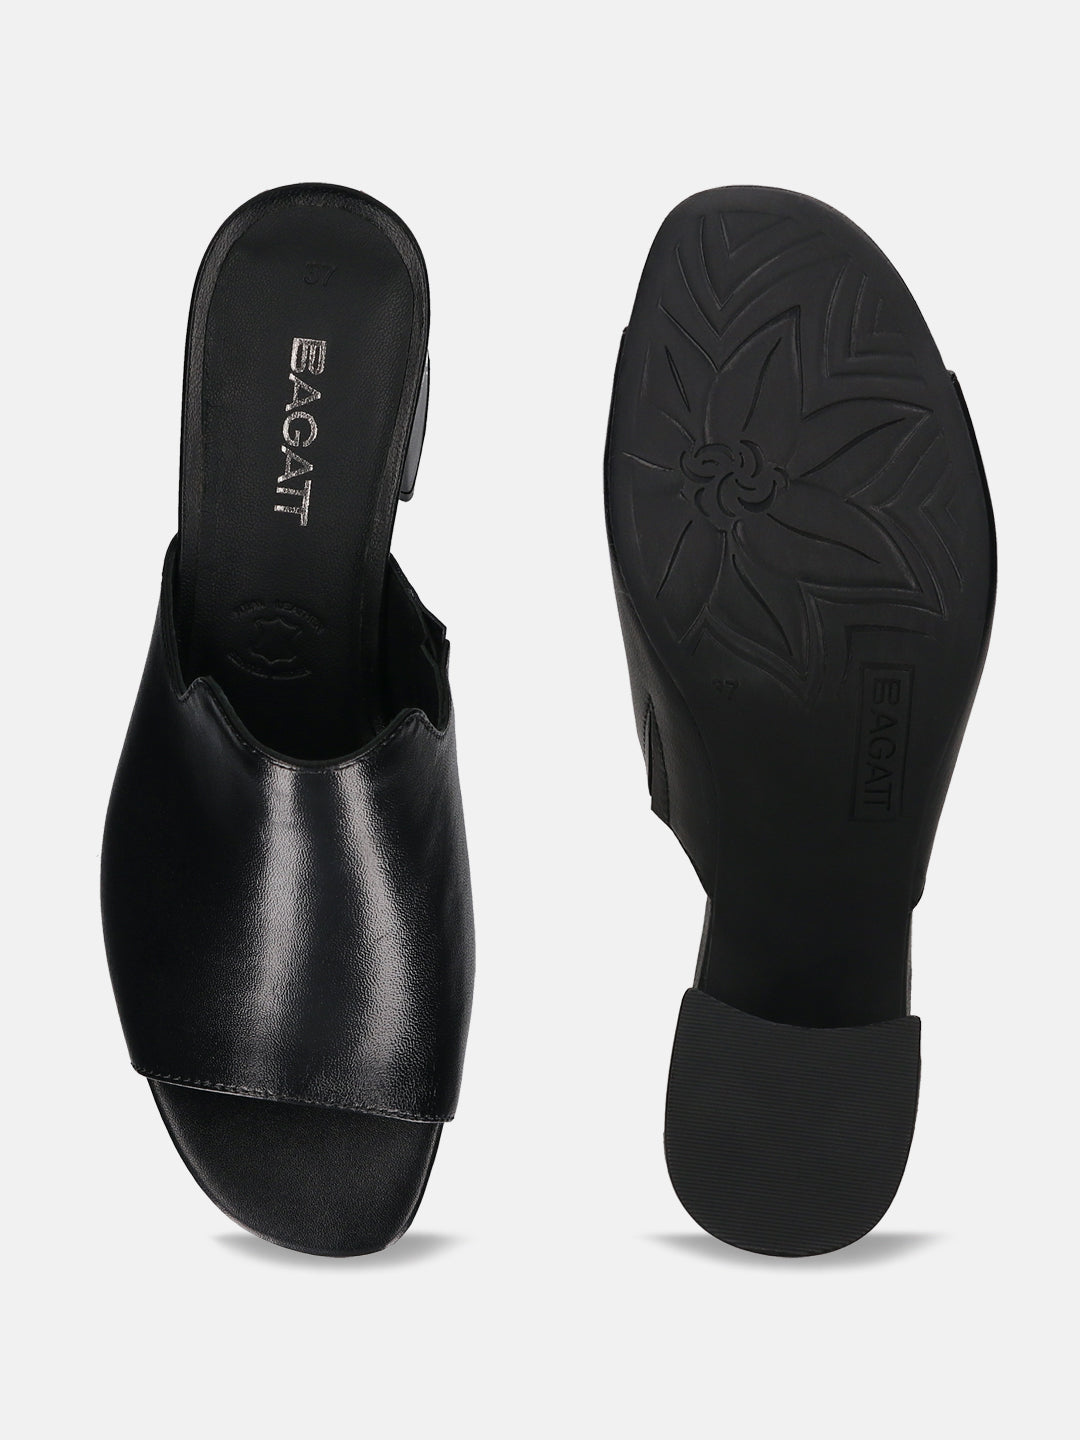 Vaiana Black Heels